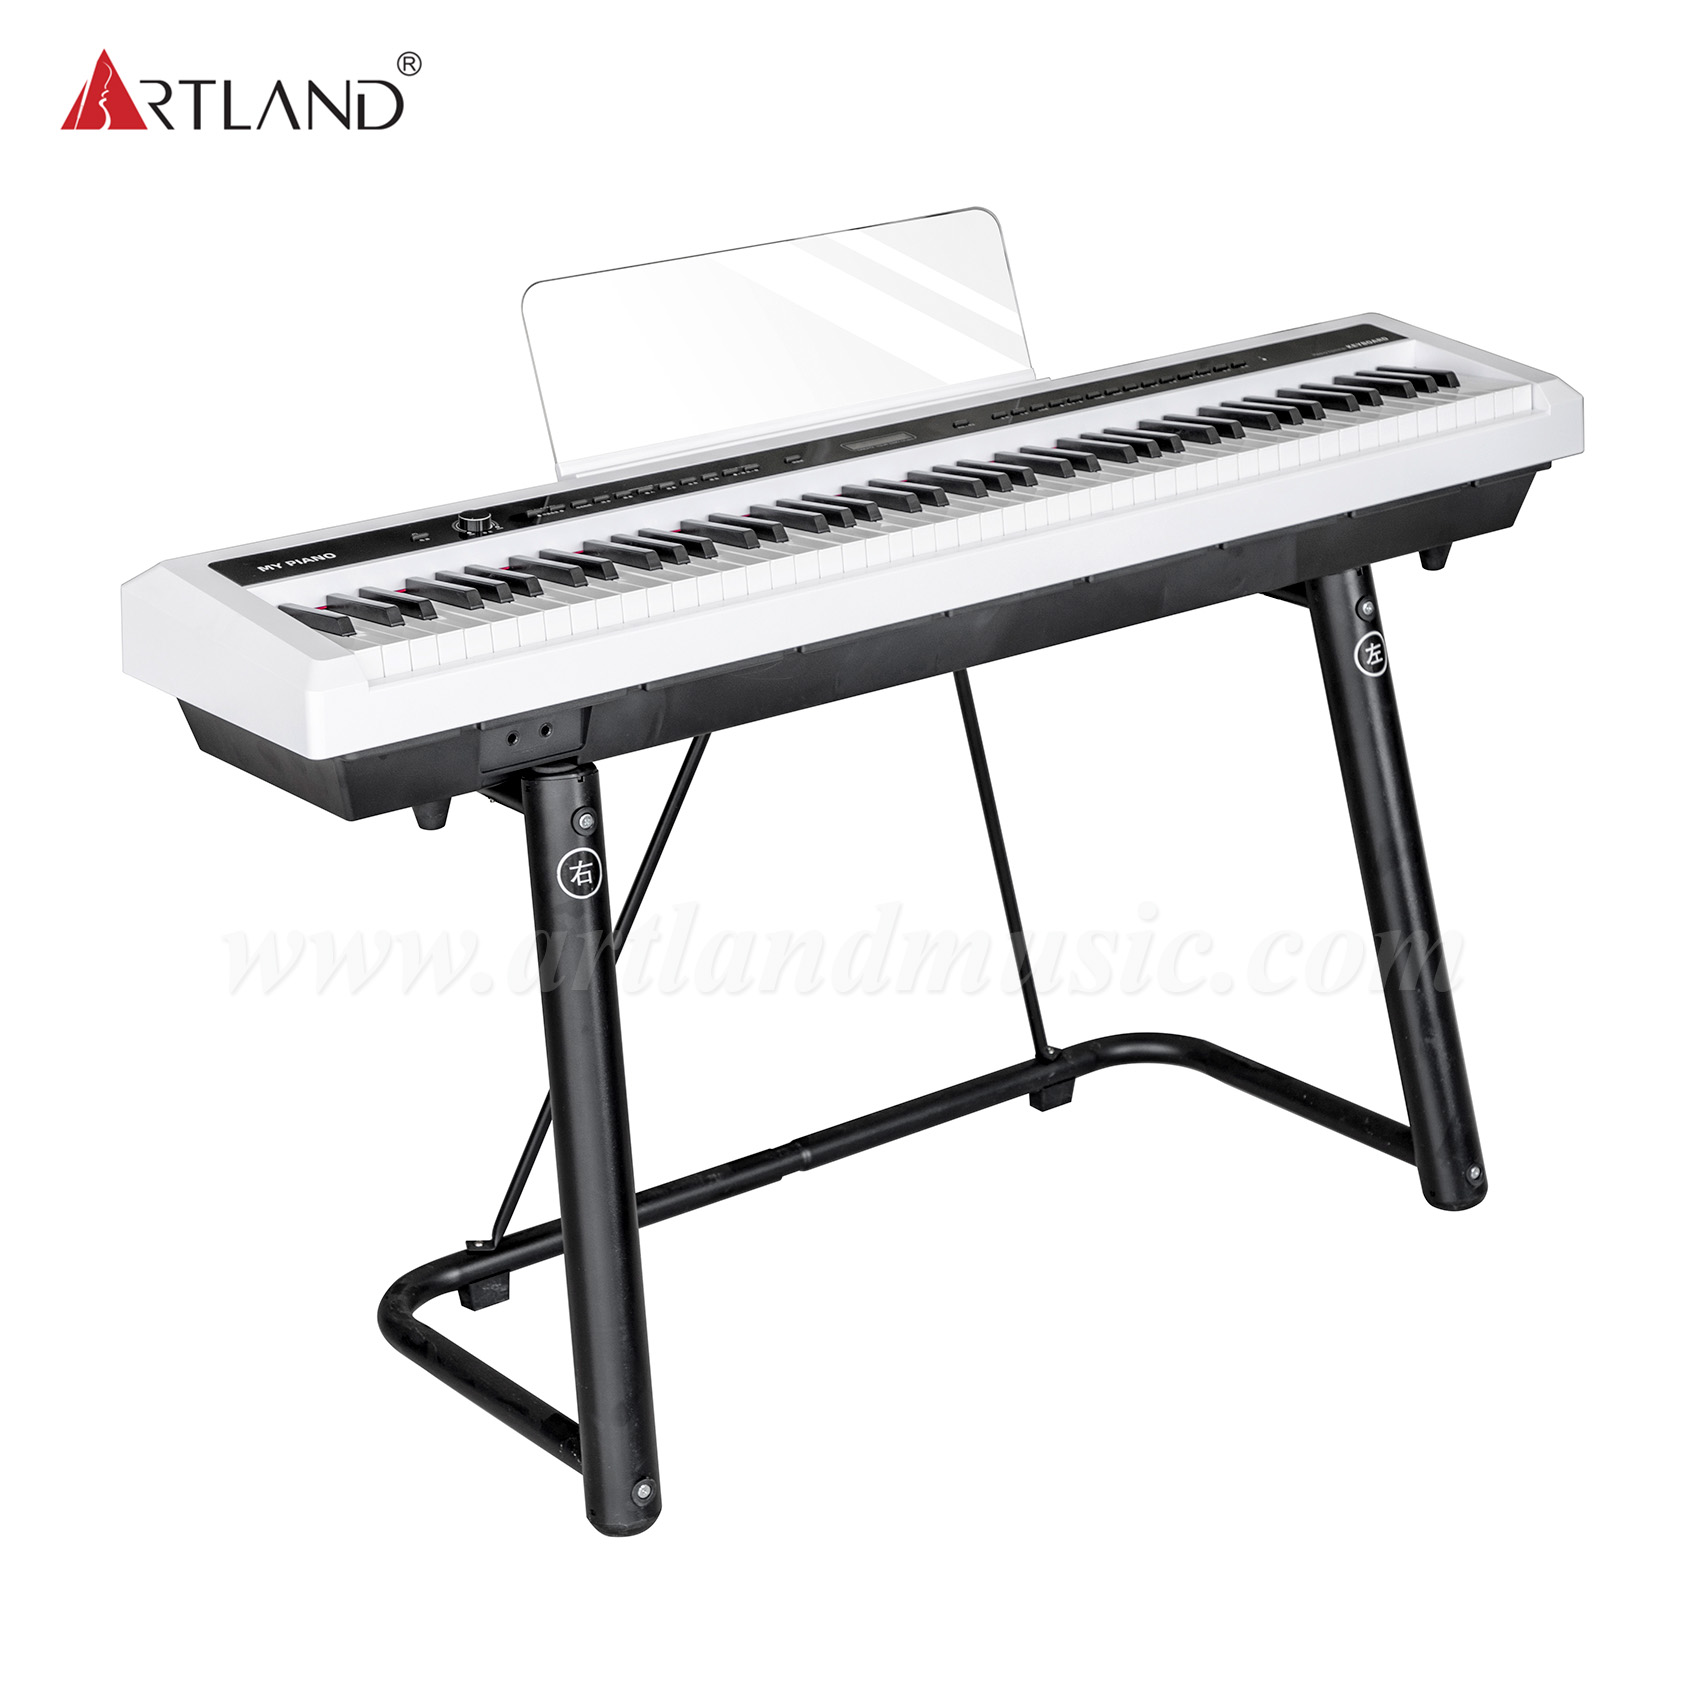 88 Keyboard French Dream5704 Digital Piano(DGP130) 